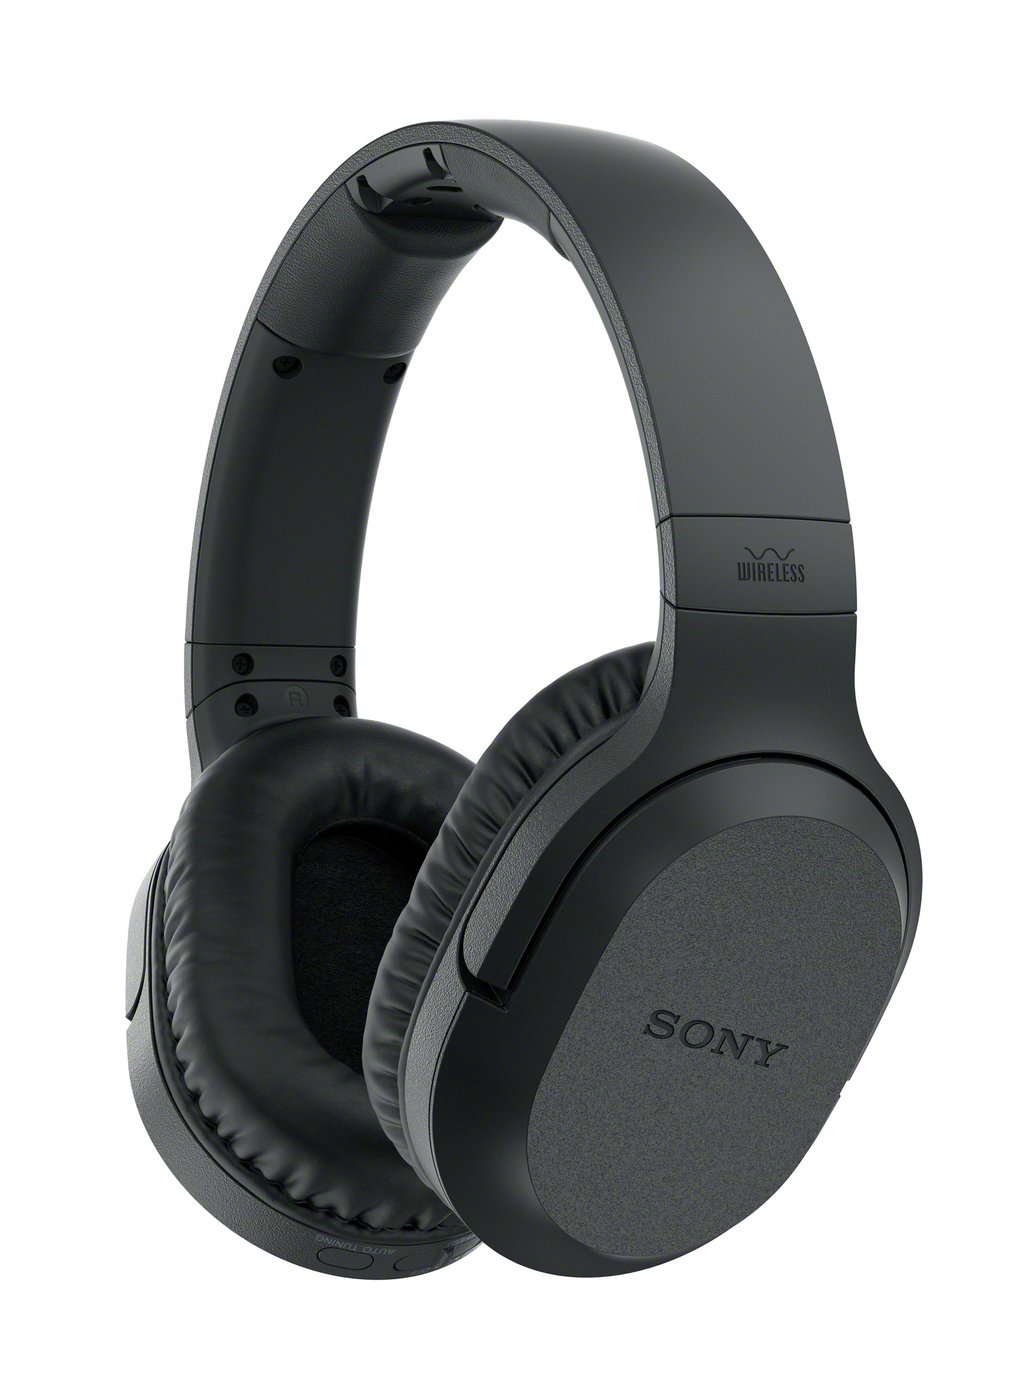 Sony MDR-RF895RK Wireless On-Ear Headphones review